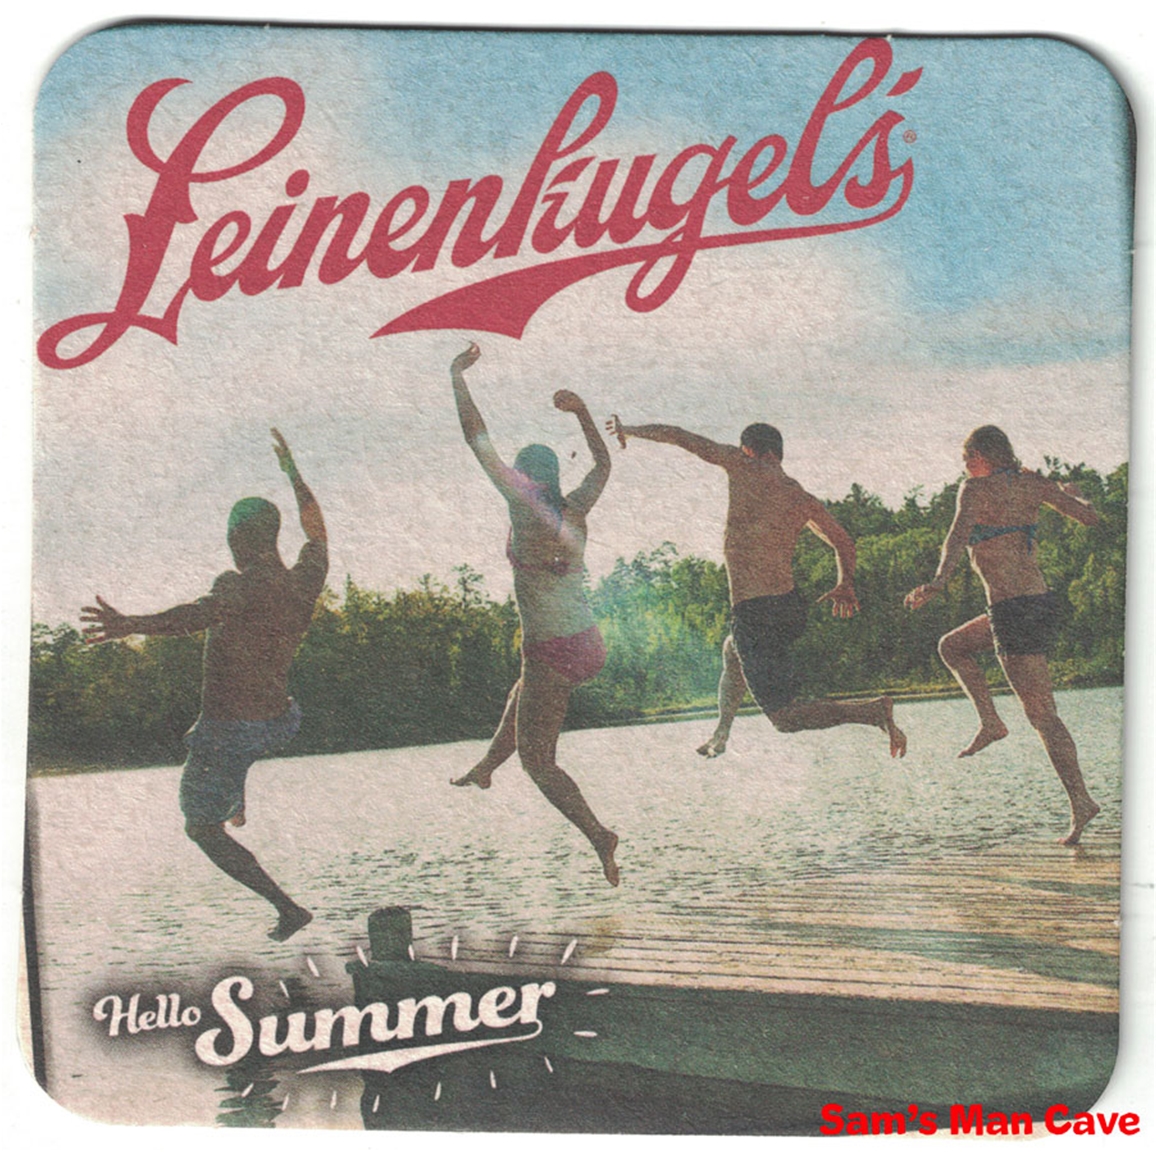 Leinenkugel's Hello Summer Beer Coaster